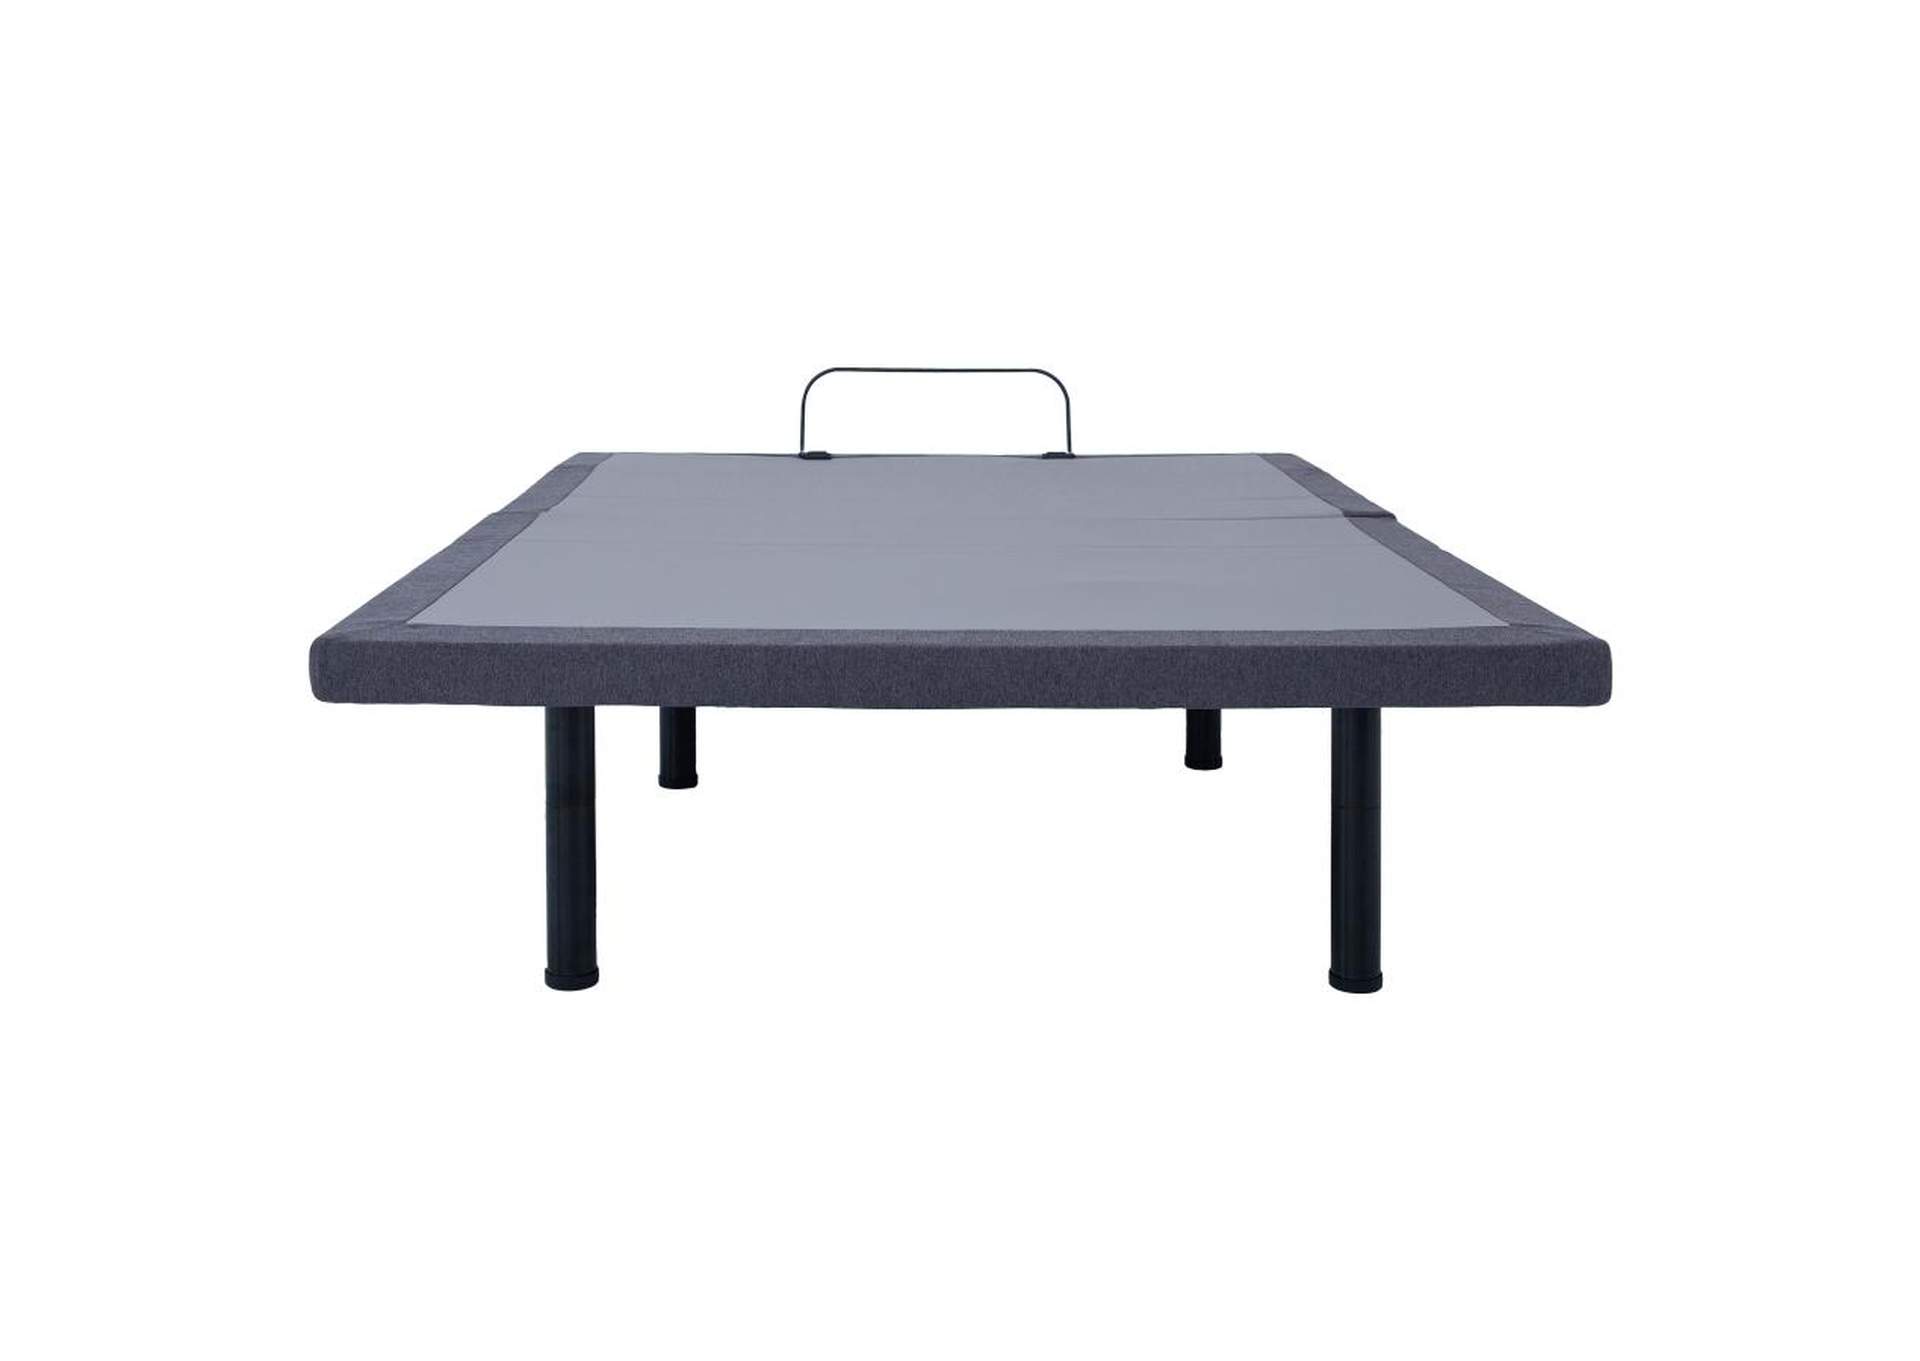 Clara Twin Xl Adjustable Bed Base Grey And Black,Coaster Furniture